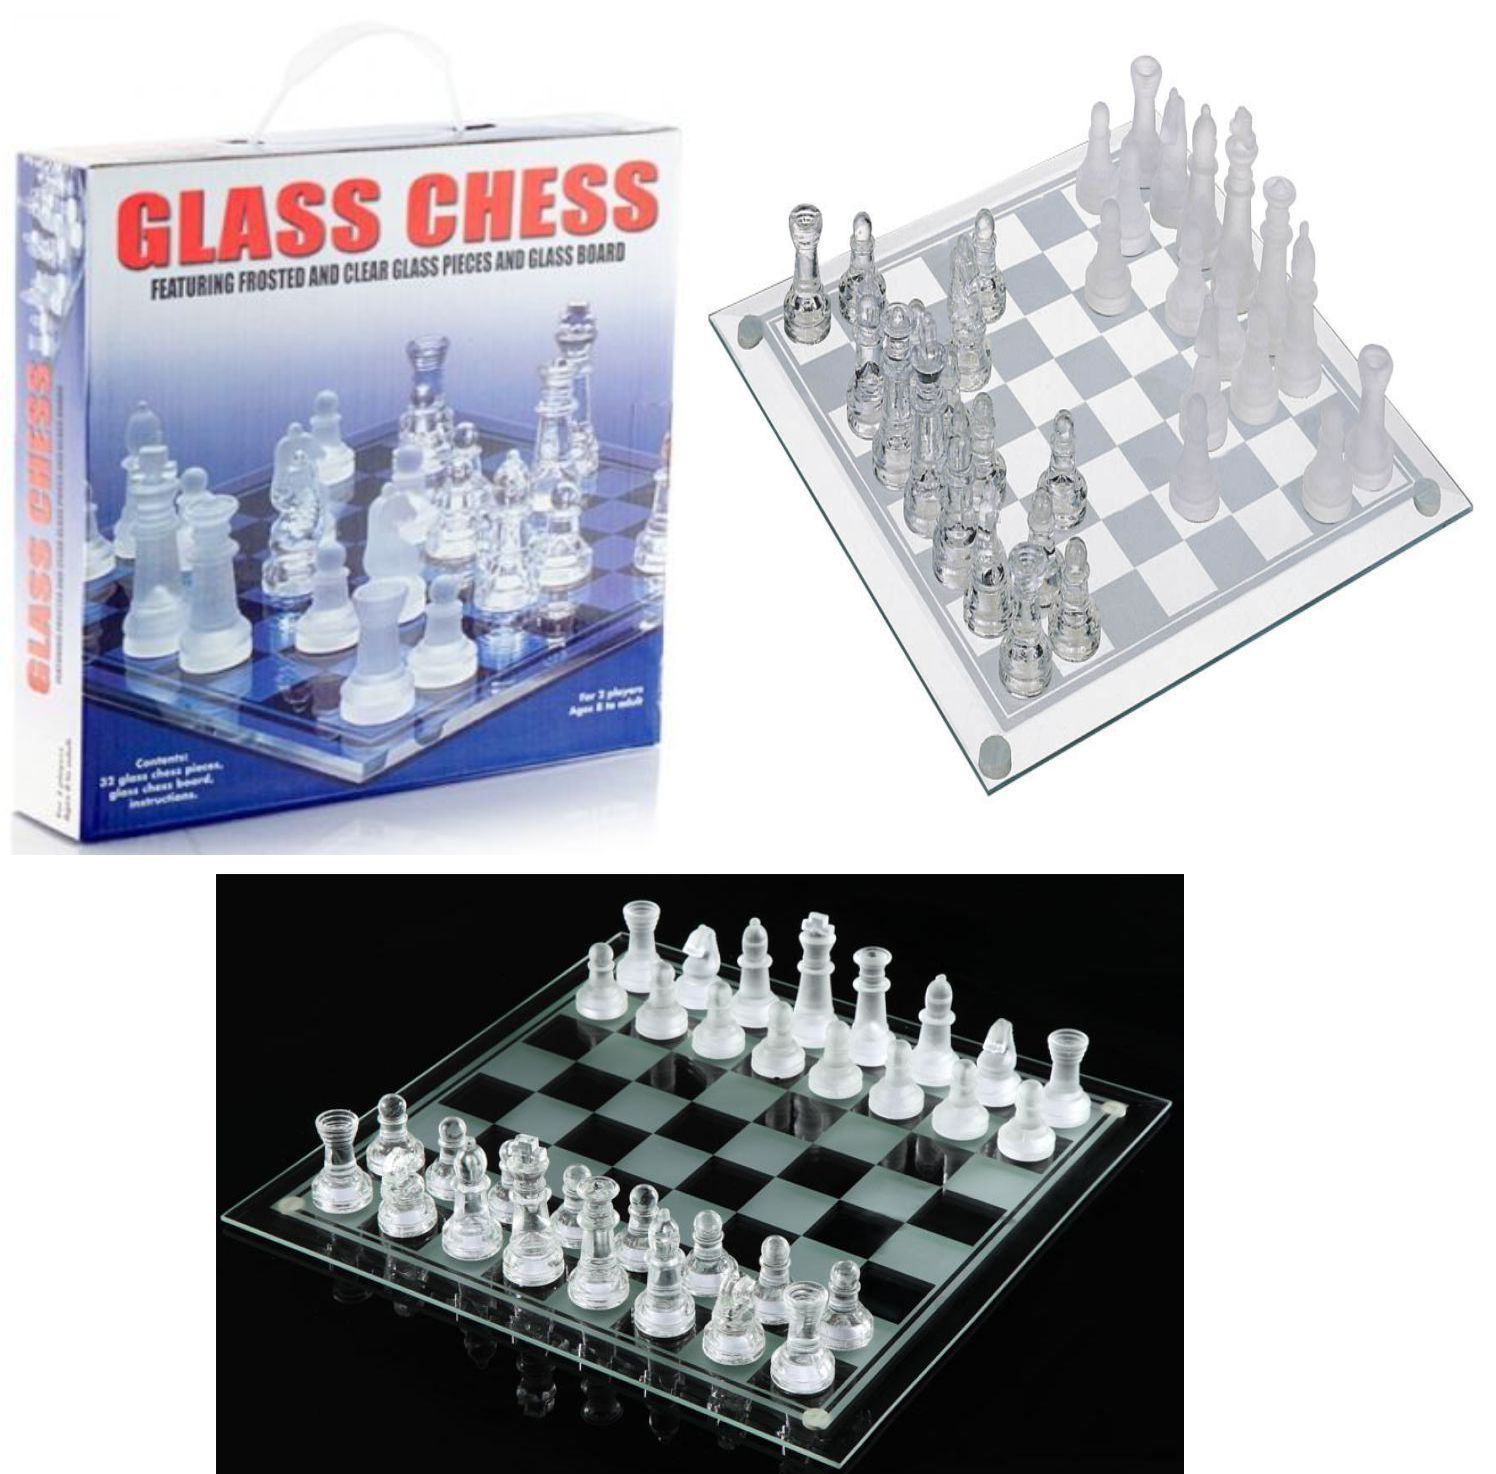 Glass chess photo